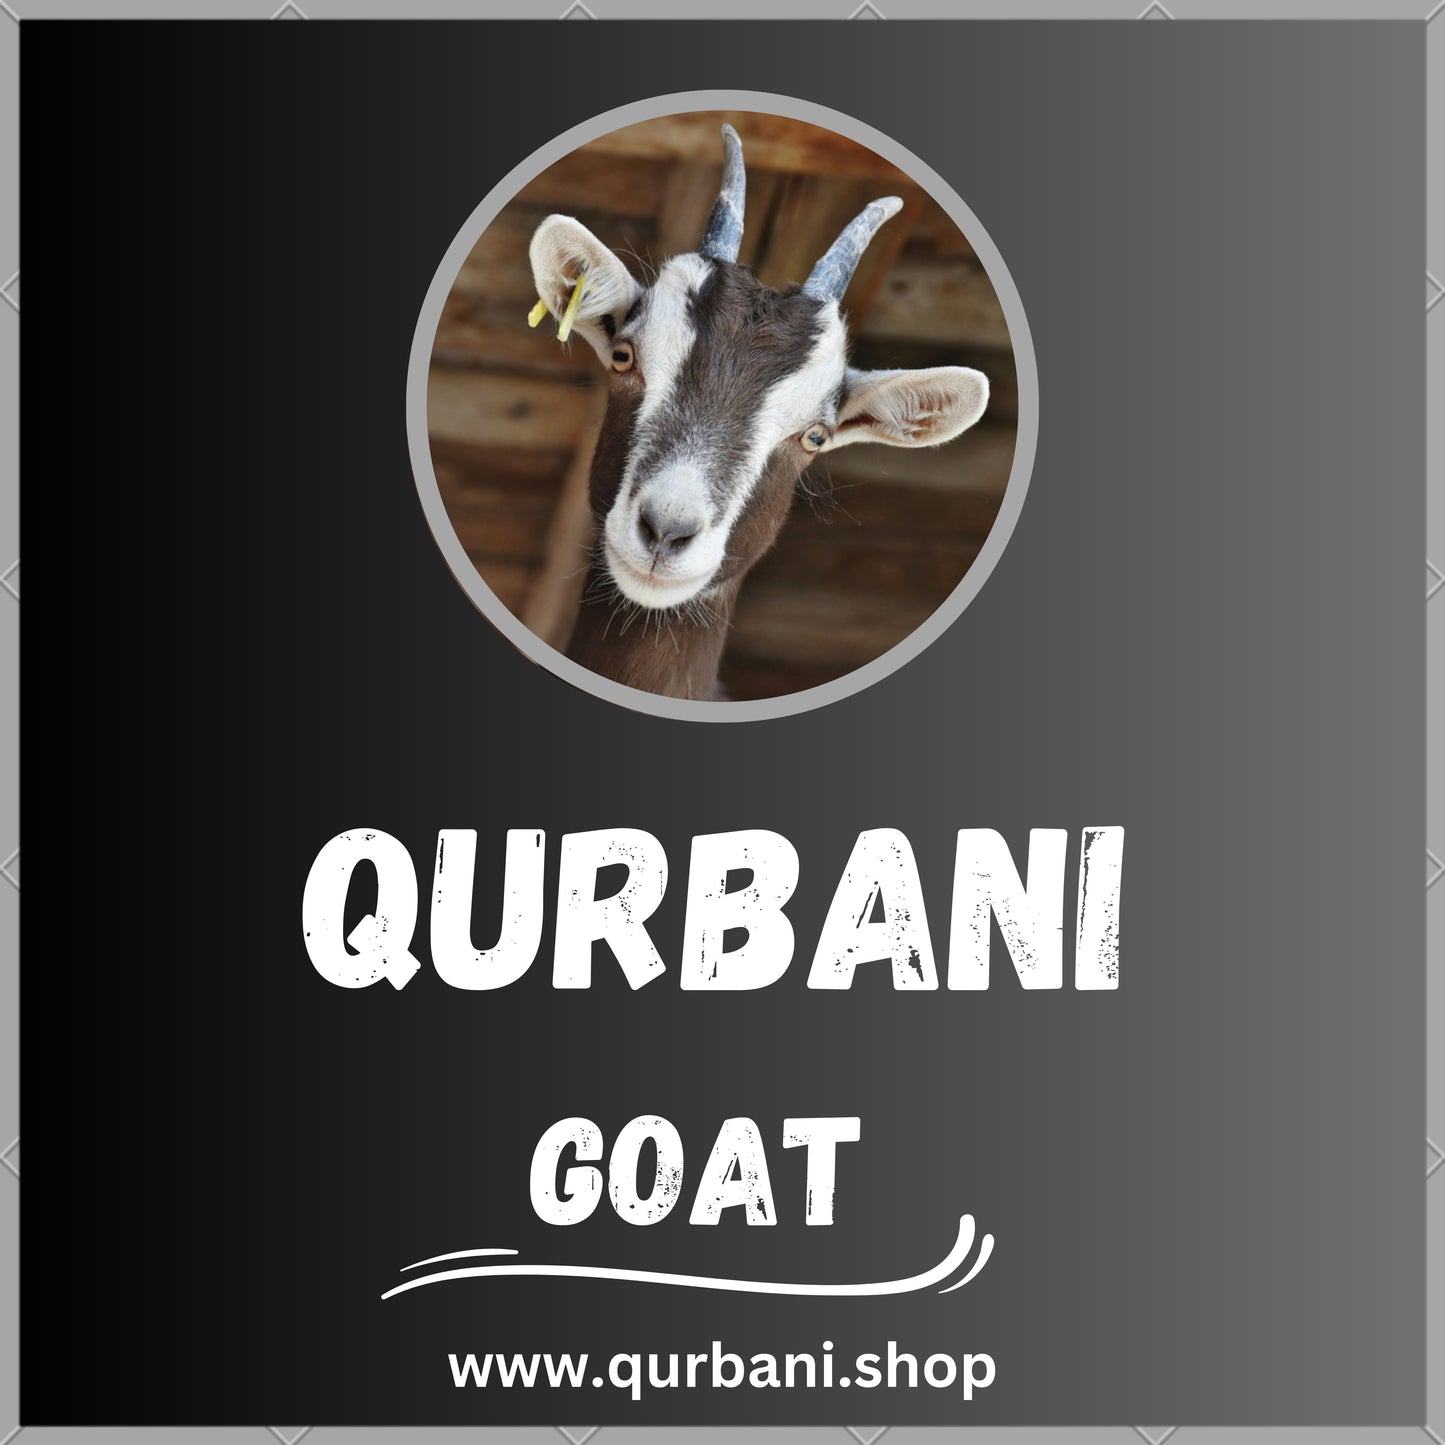 Mobile Qurbani Services - Celebrate Eid al-Adha with Ethical Sacrifice